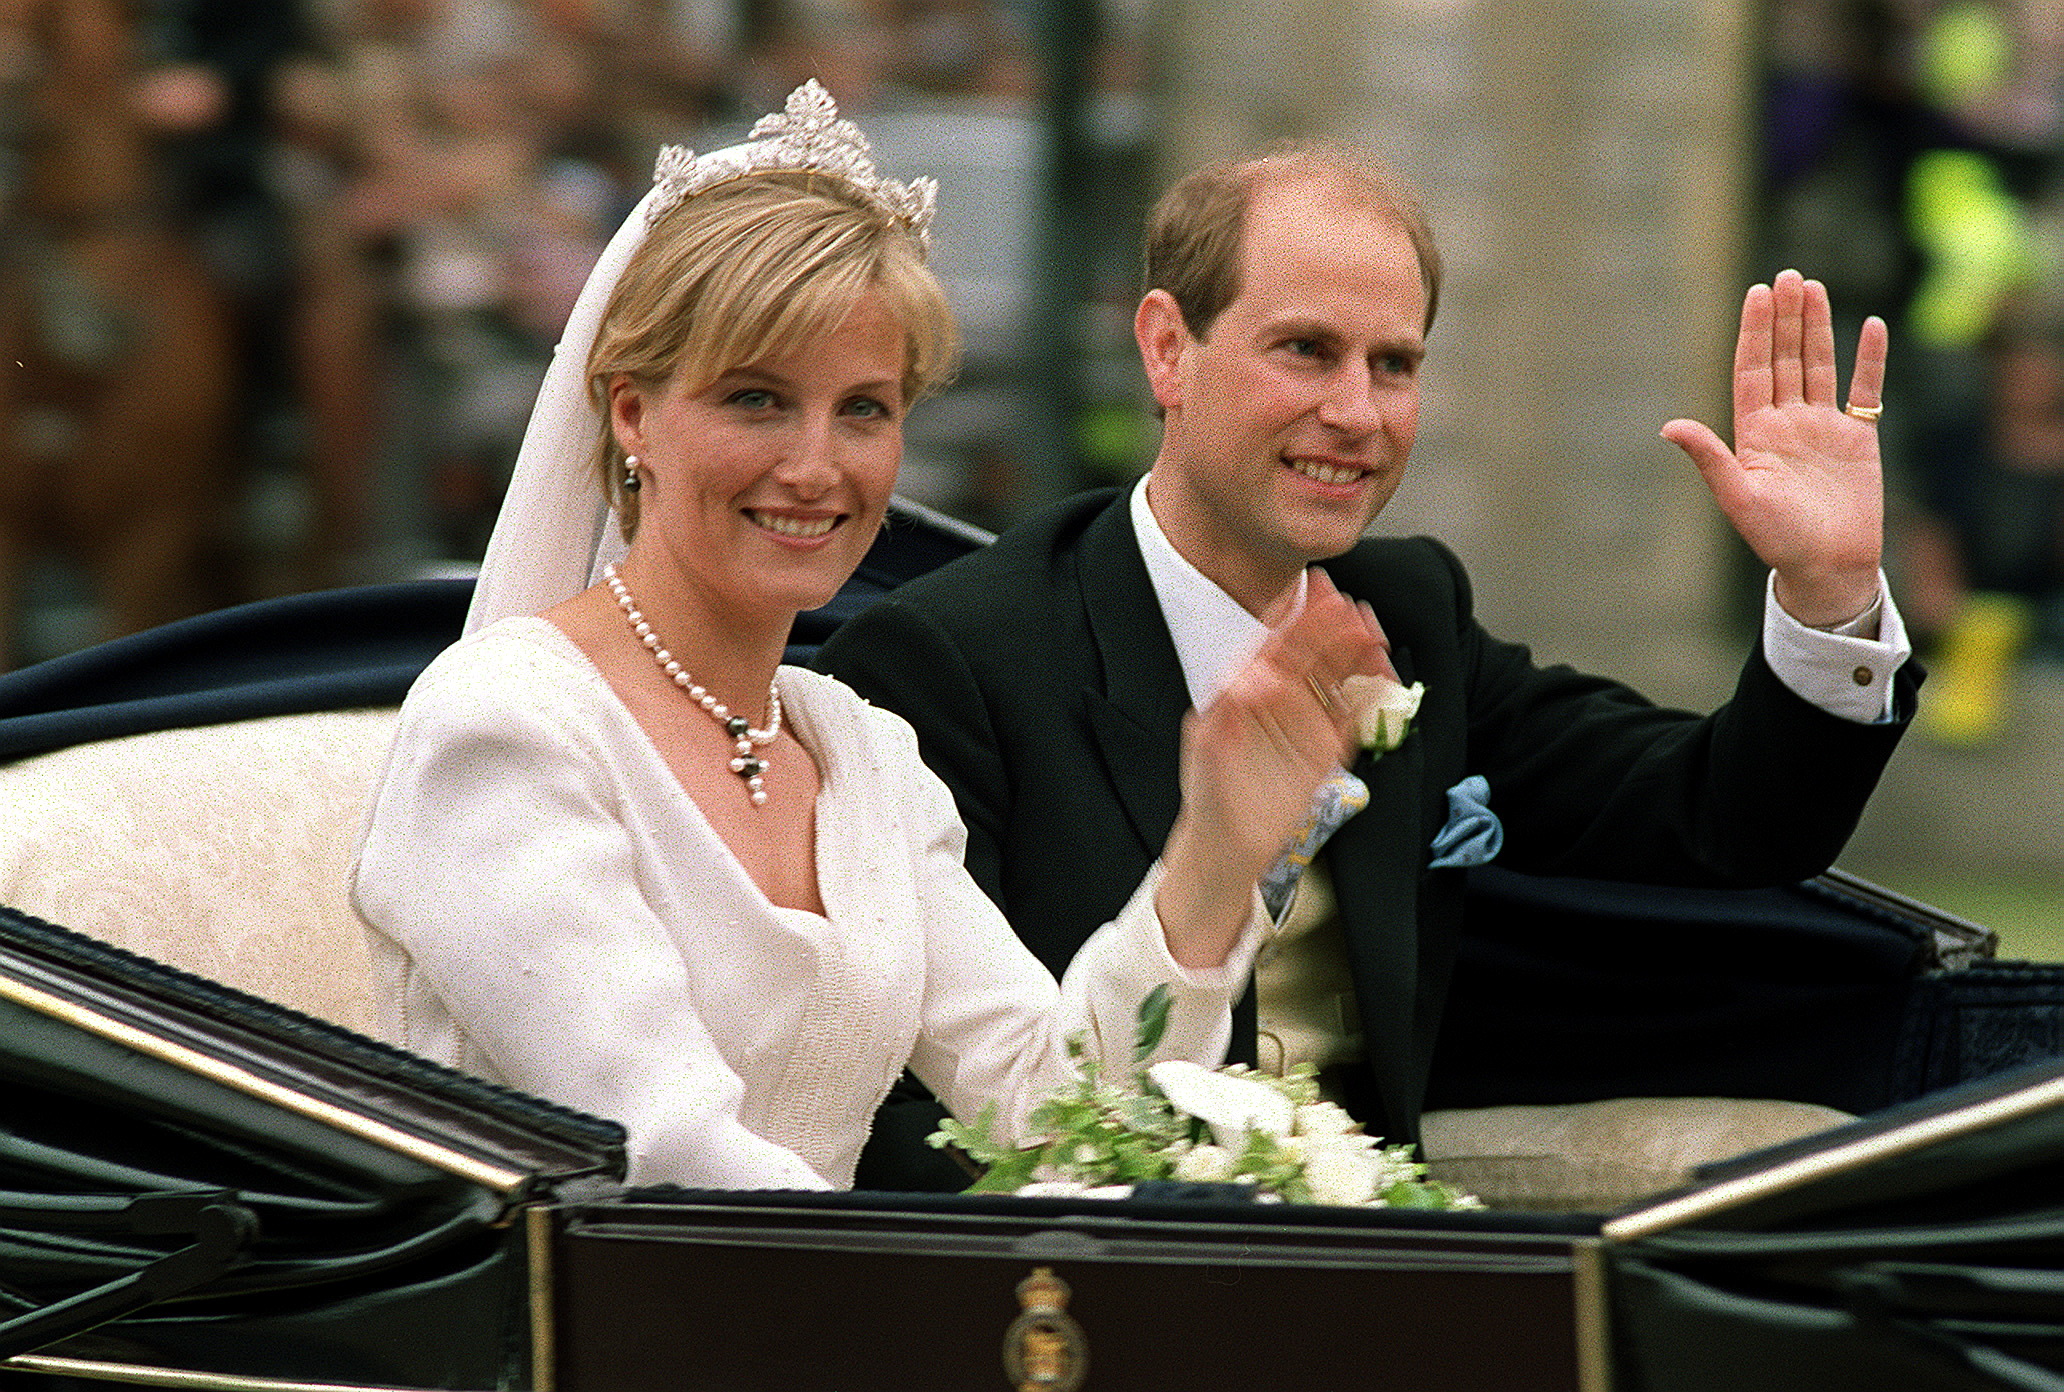  Prince Edward and Sophie Rhys-Jones' wedding day